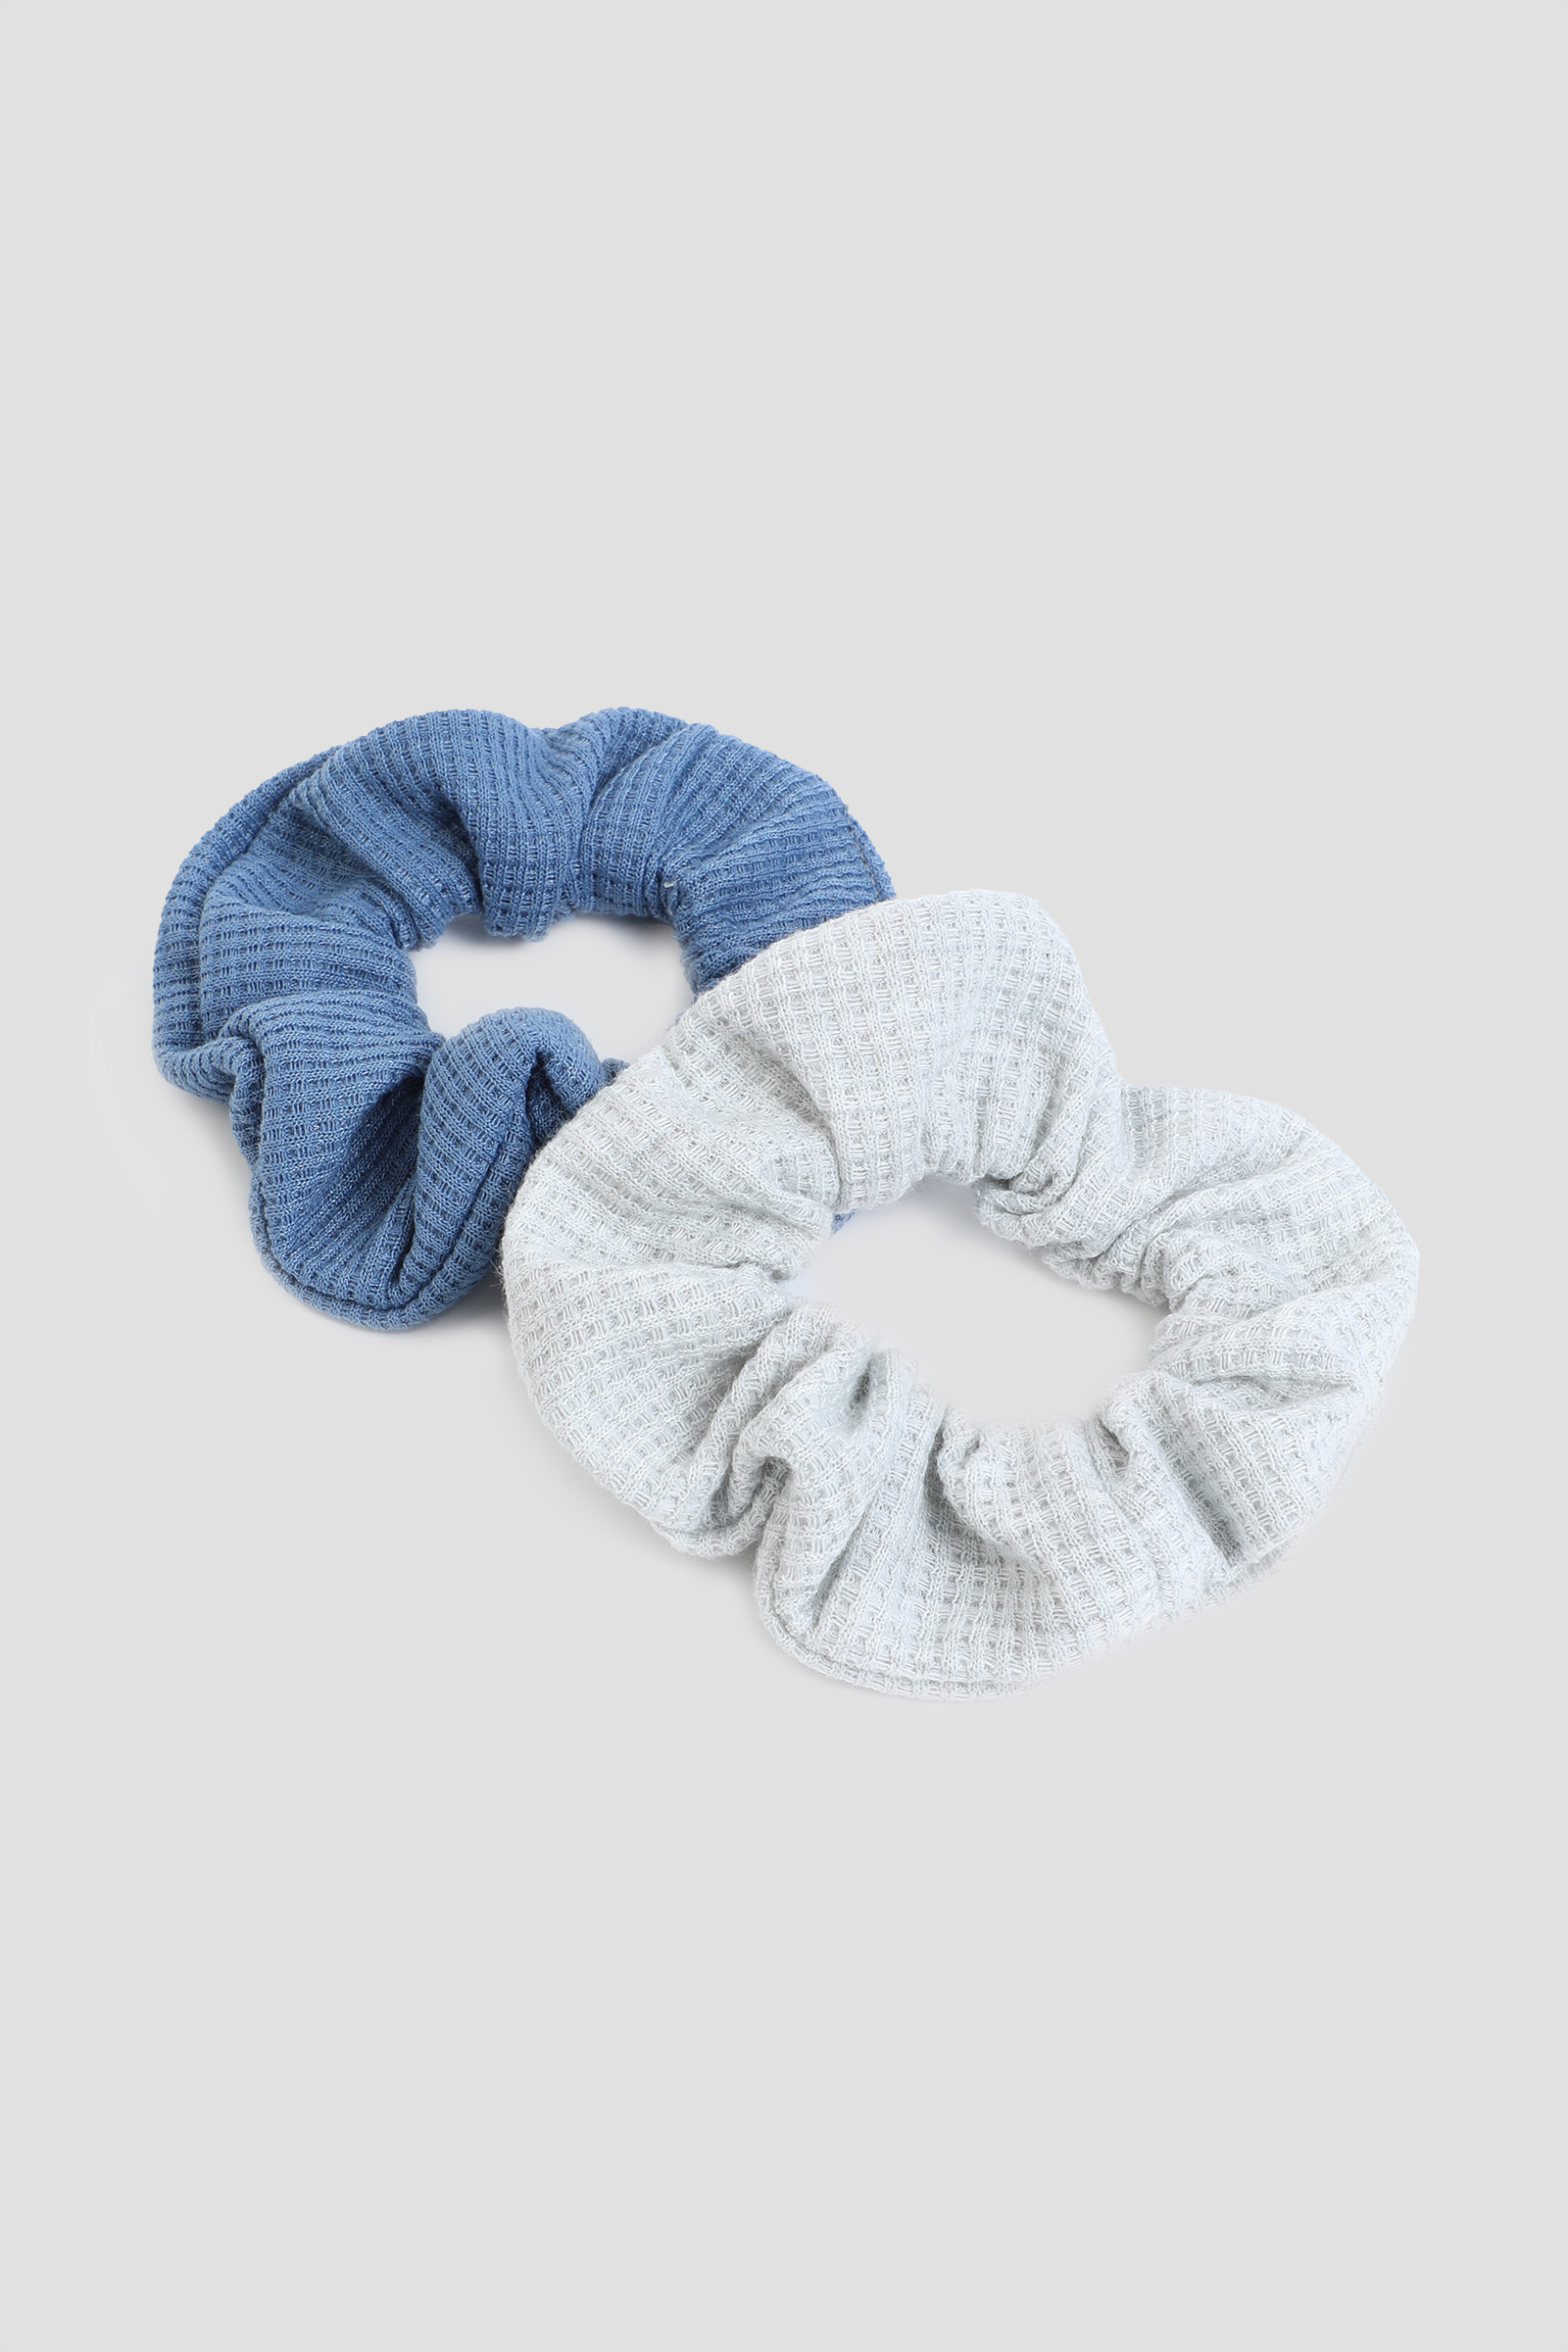 Ardene 2-Pack Waffle Knit Scrunchies in Medium Blue